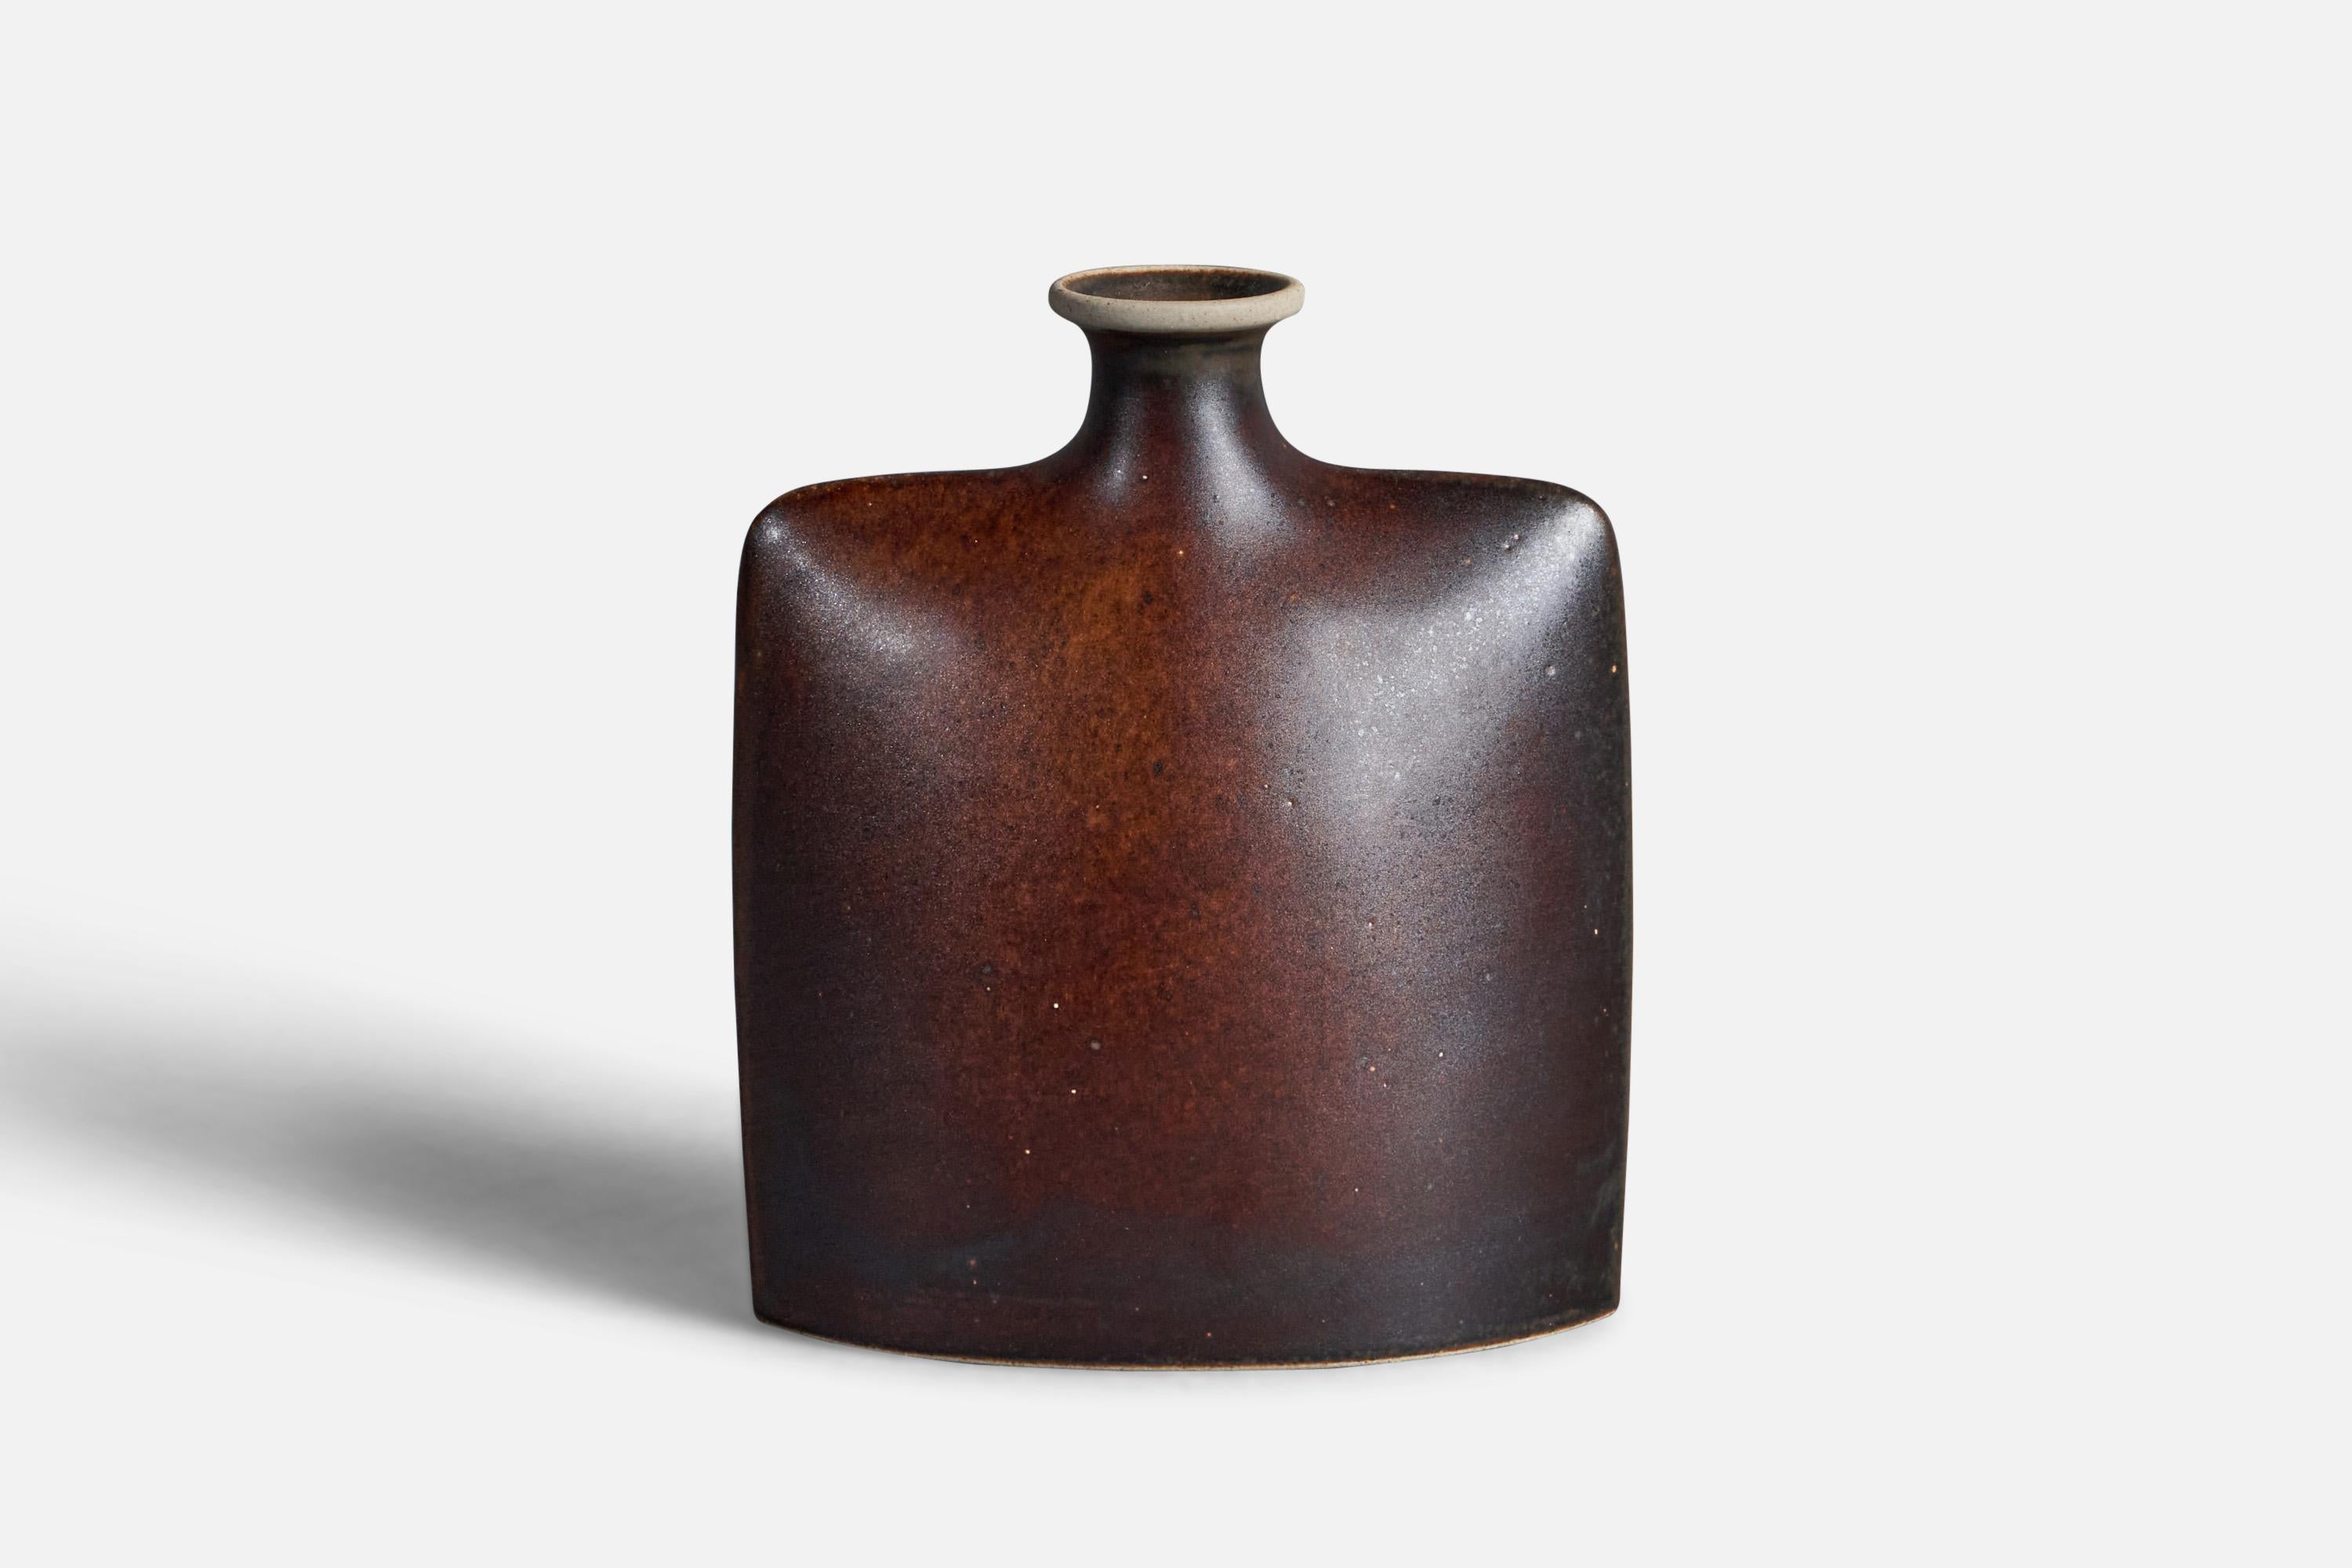 A brown-glazed stoneware vase designed and produced by Knabstrup, Denmark, c. 1960s.